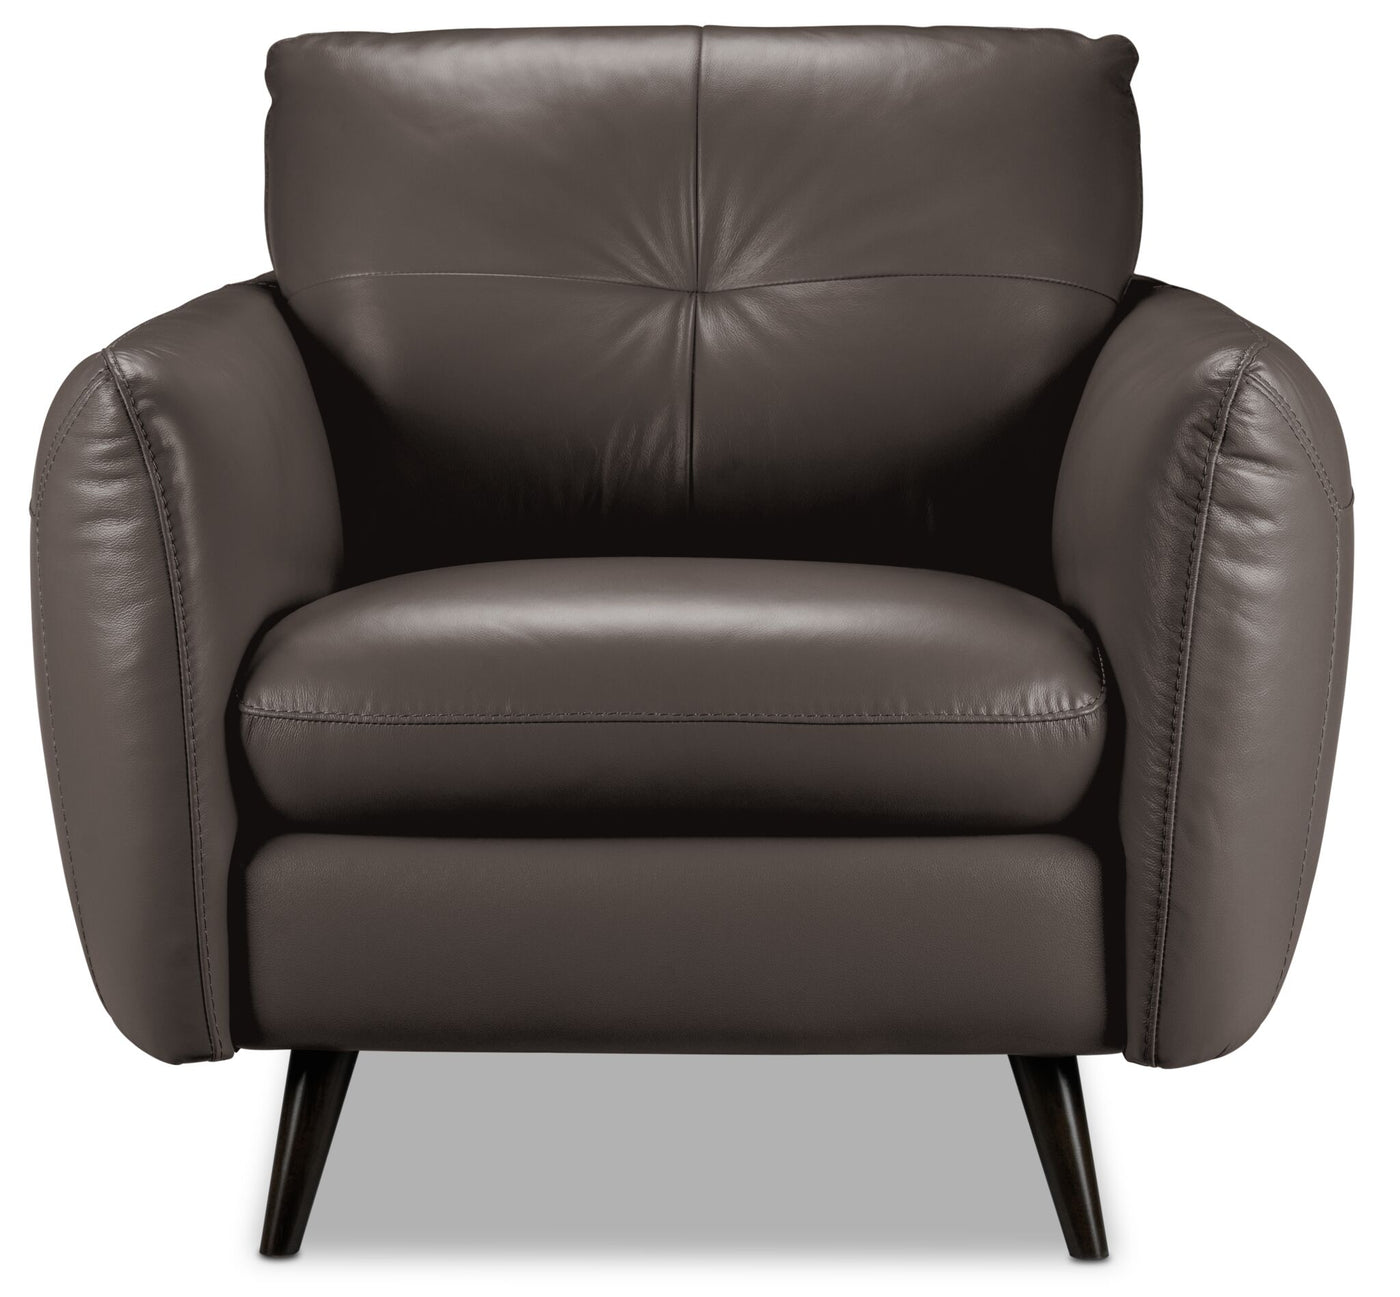 Carlino Leather Chair - Grey